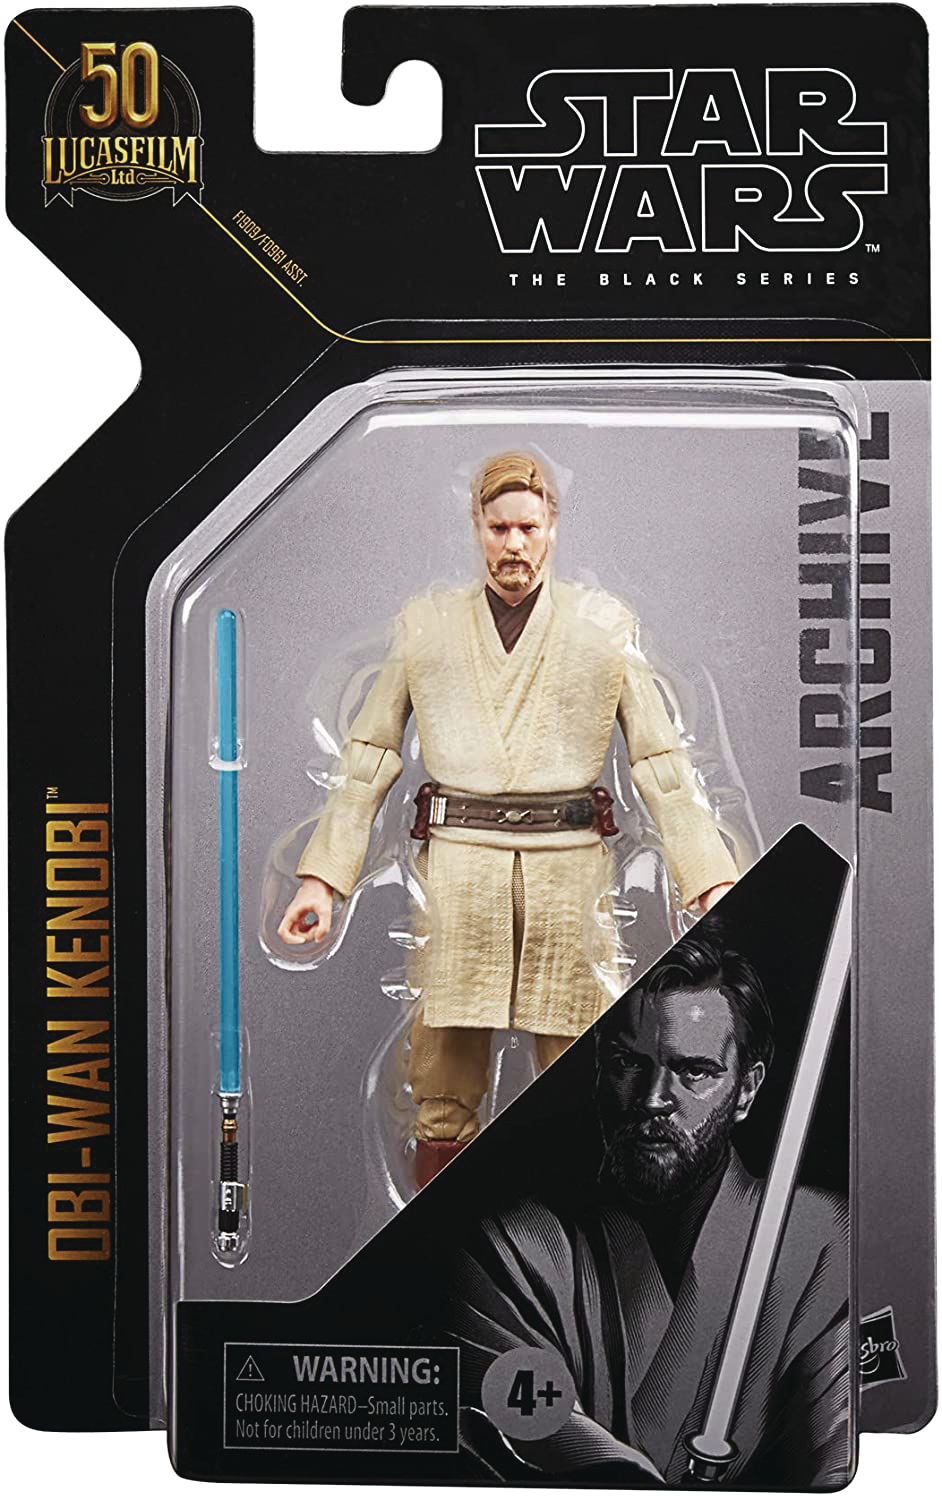 Star Wars Black Archives 6 Inch Ep3 Obi-Wan Action Figure Case